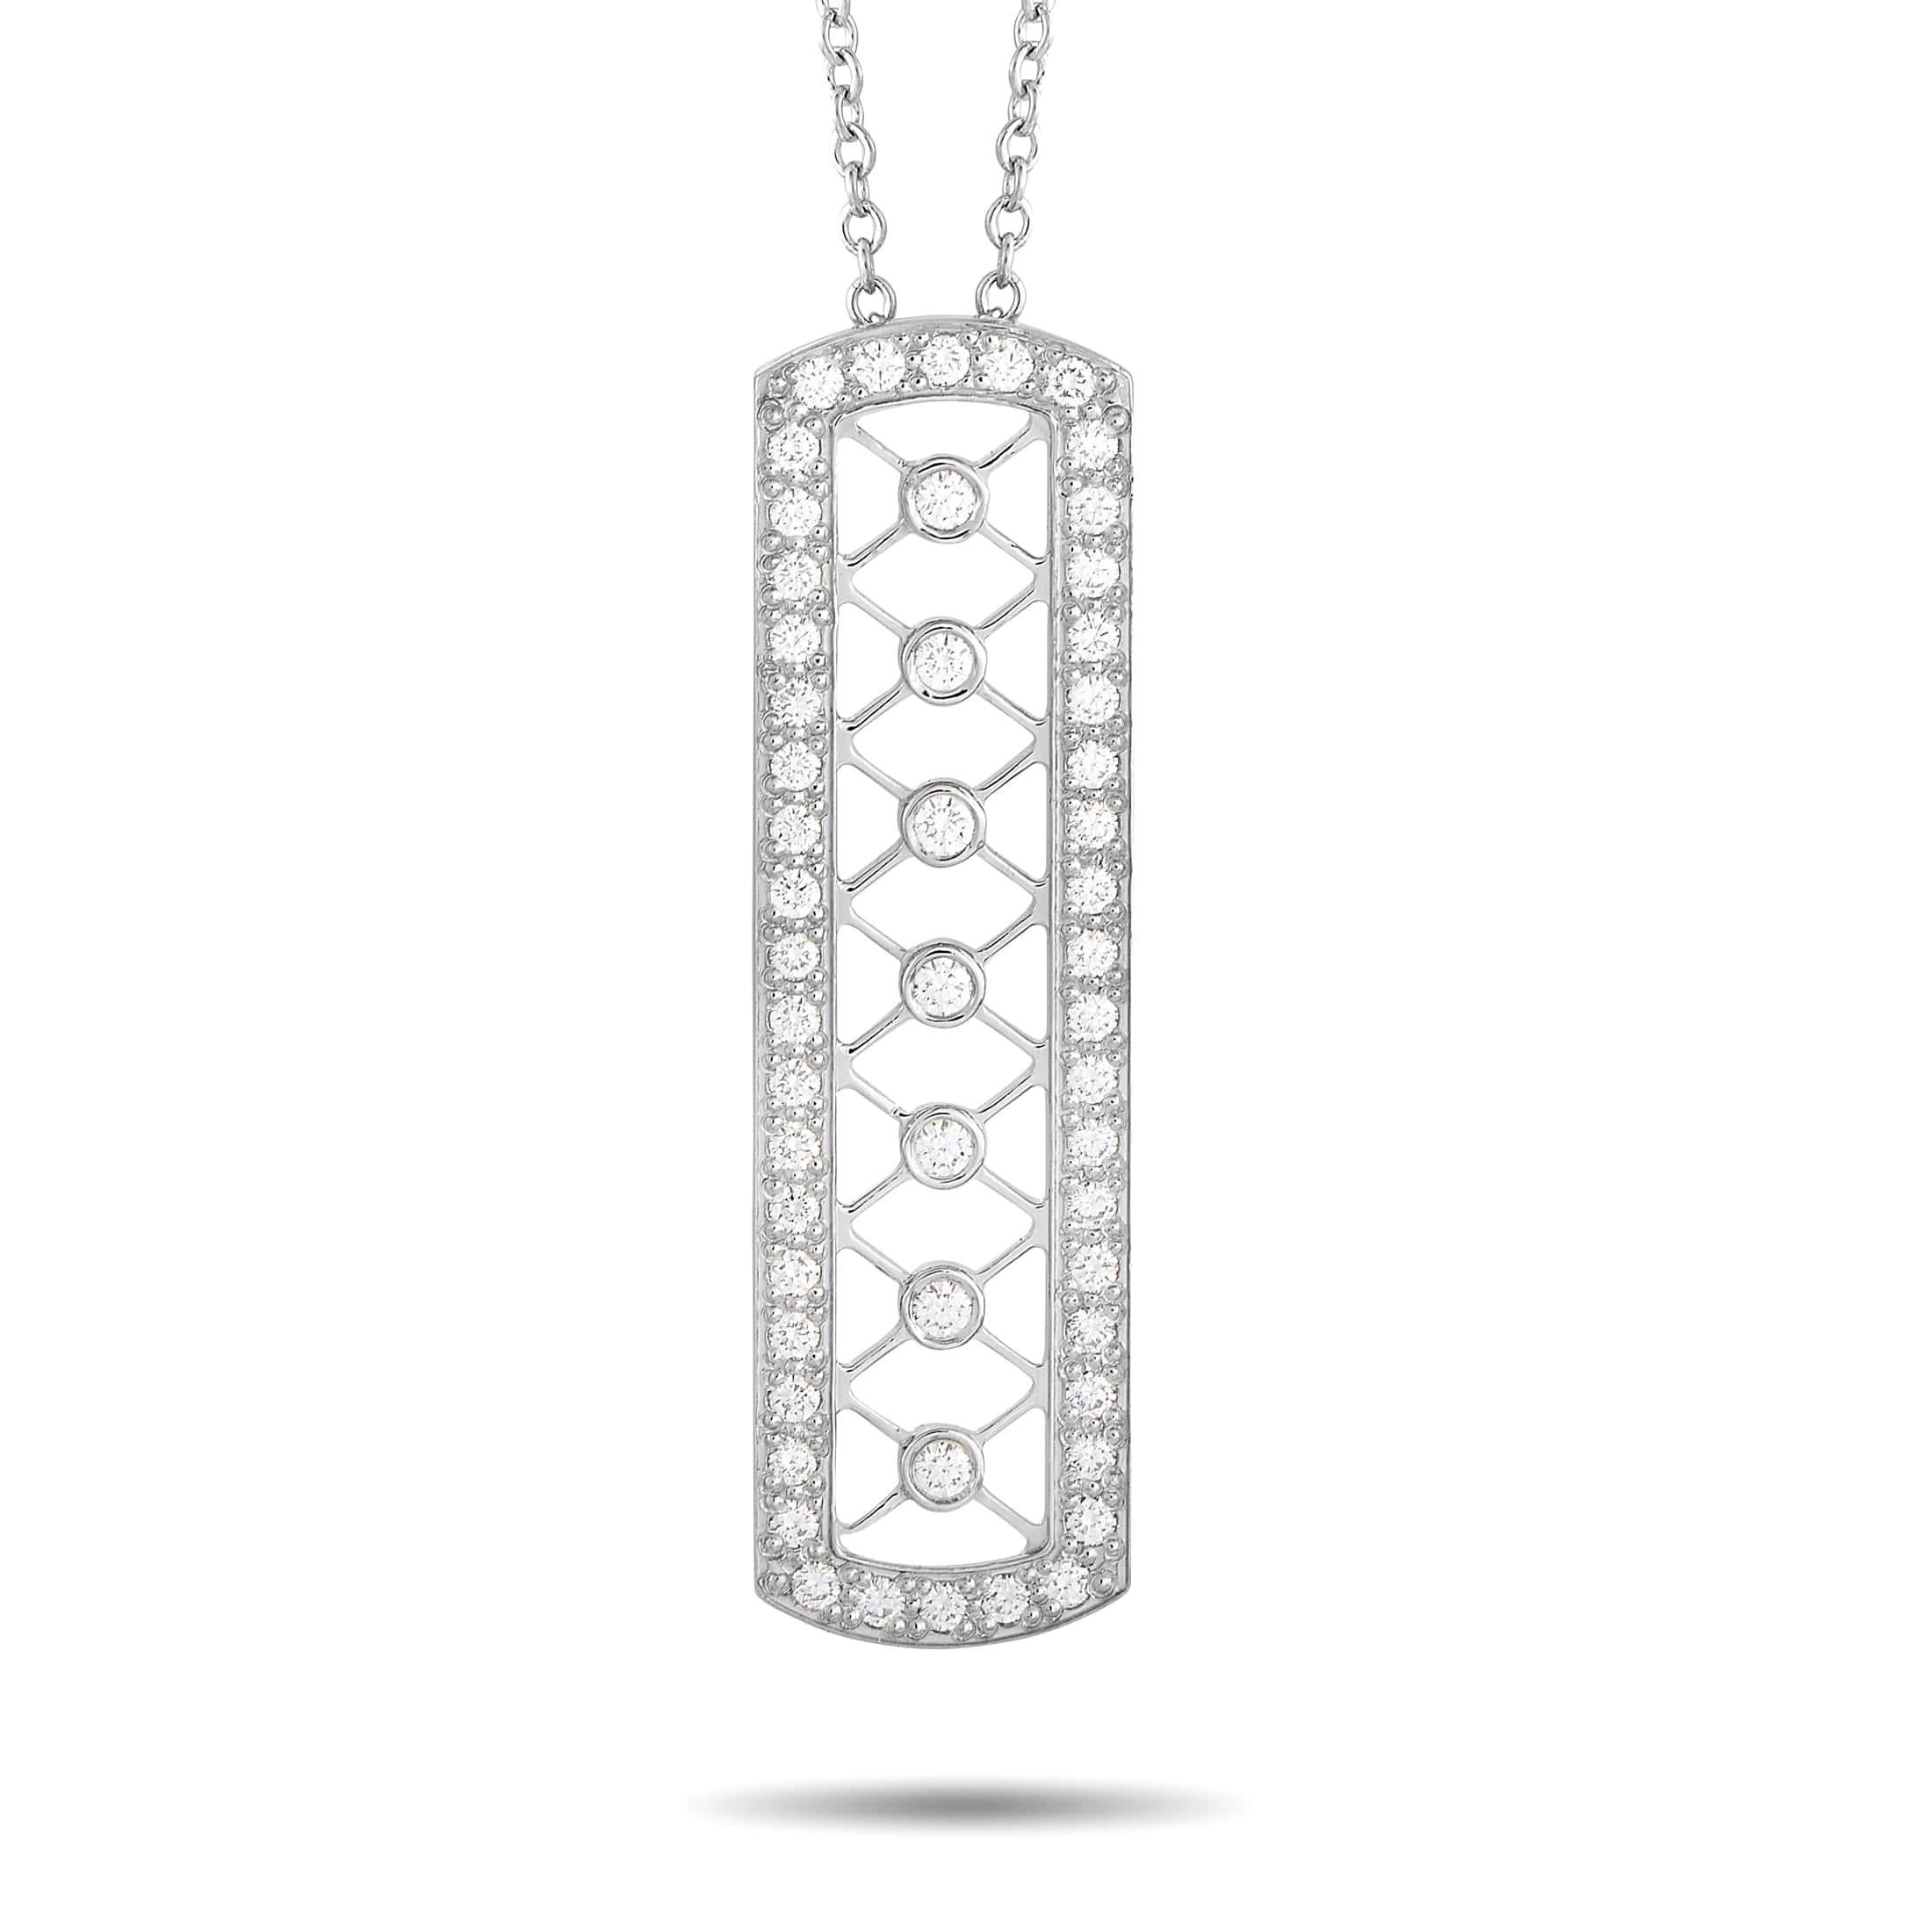 Tiffany & Co. Platinum 0.40 ct Diamond Pendant Necklace